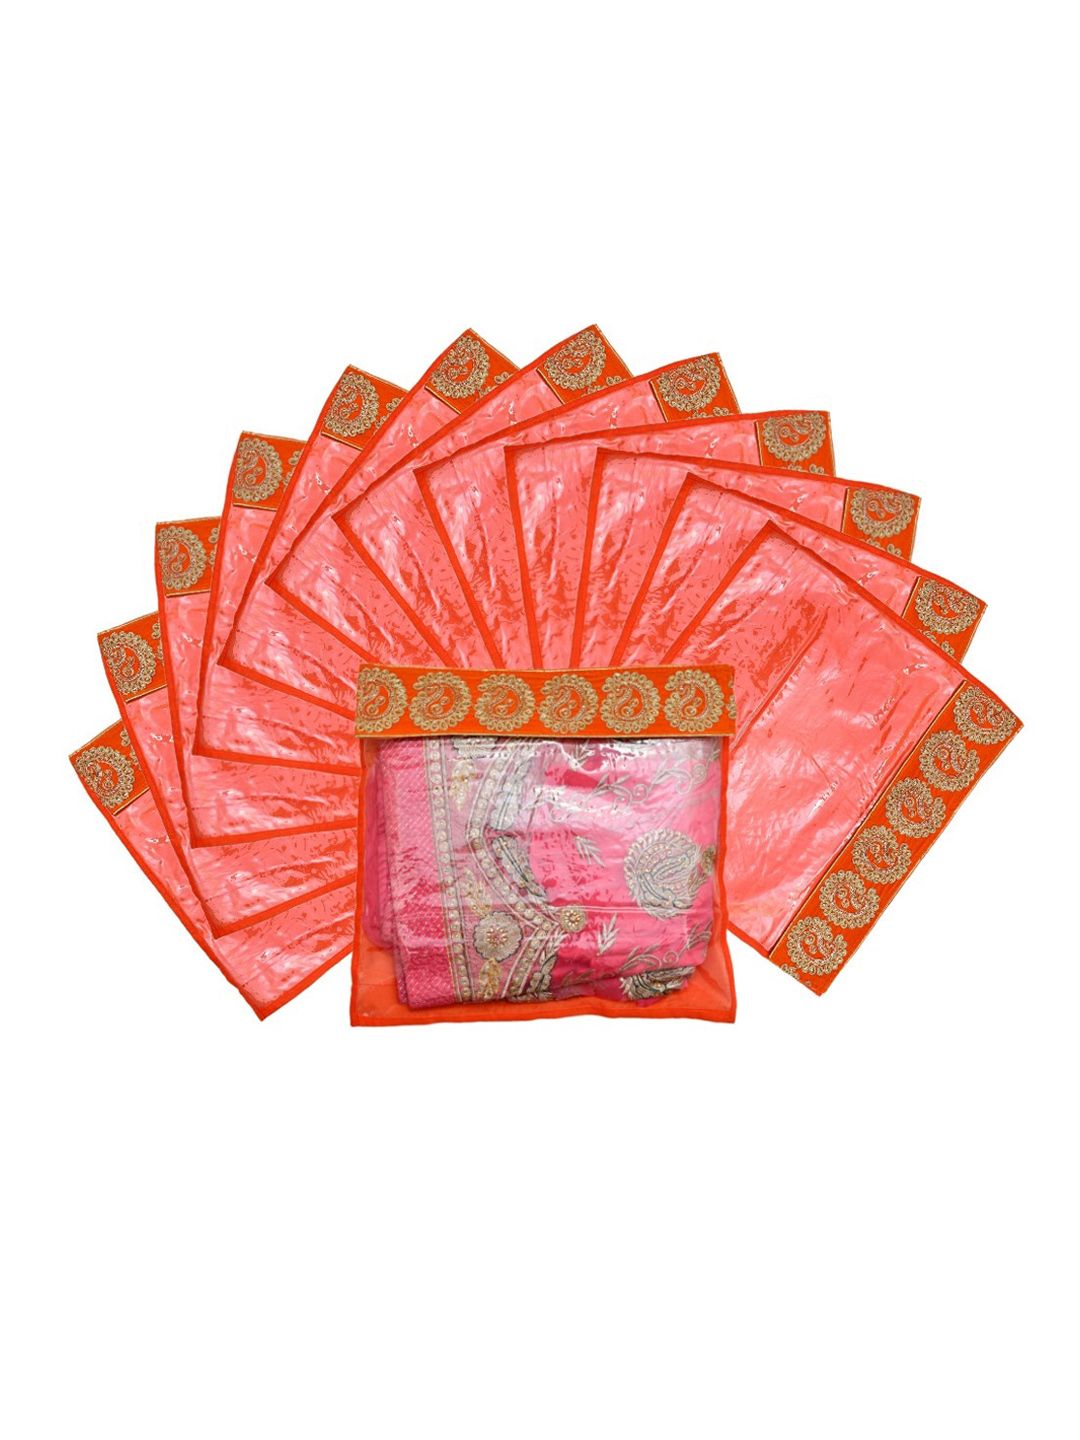 Kuber Industries Set Of 12 Orange & Transparent Zari Border Flip Single Packing Saree Cover Organizers Price in India